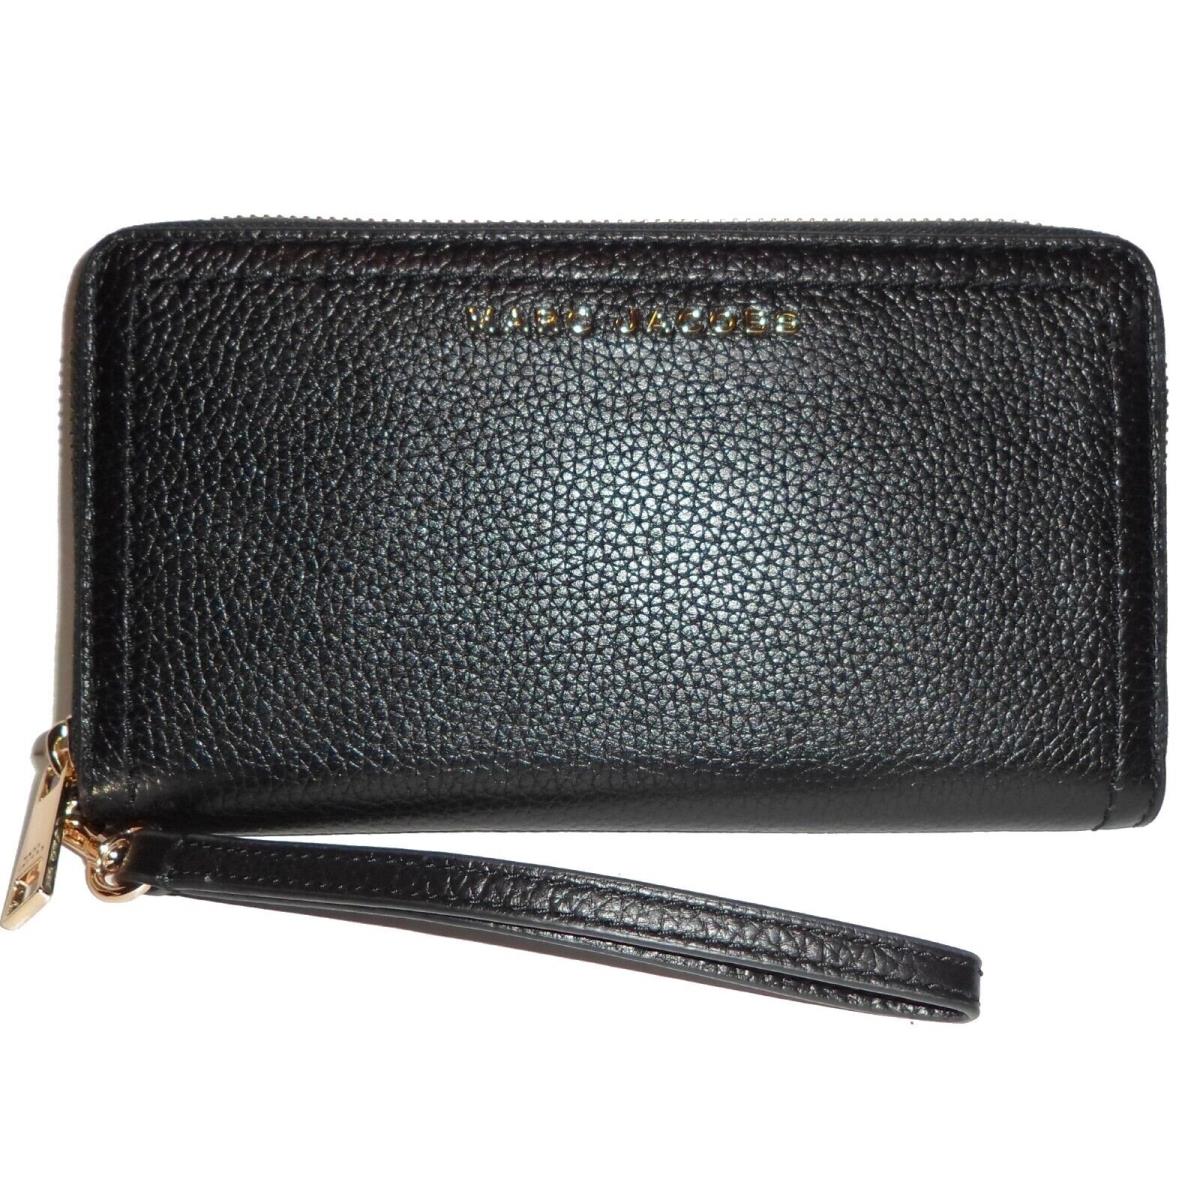 Marc Jacobs Black Leather Zip-around Clutch Wallet Wristlet